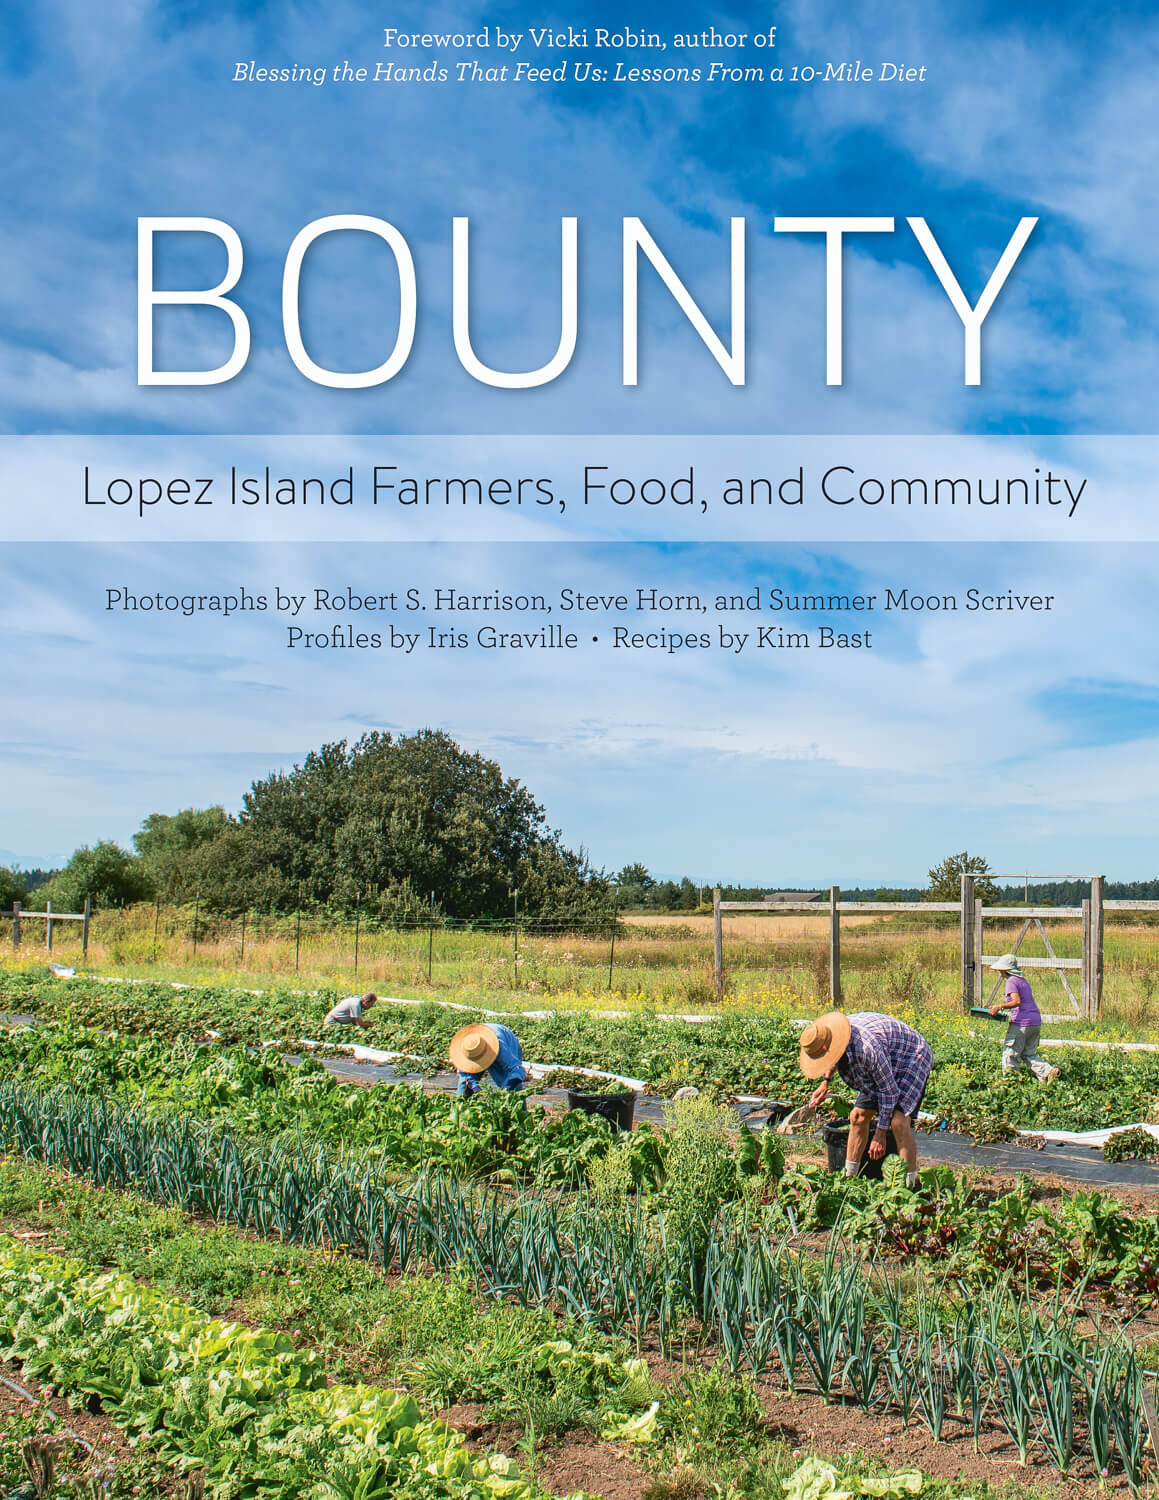 BOUNTY: Lopez Island Farmers, Food, and Community